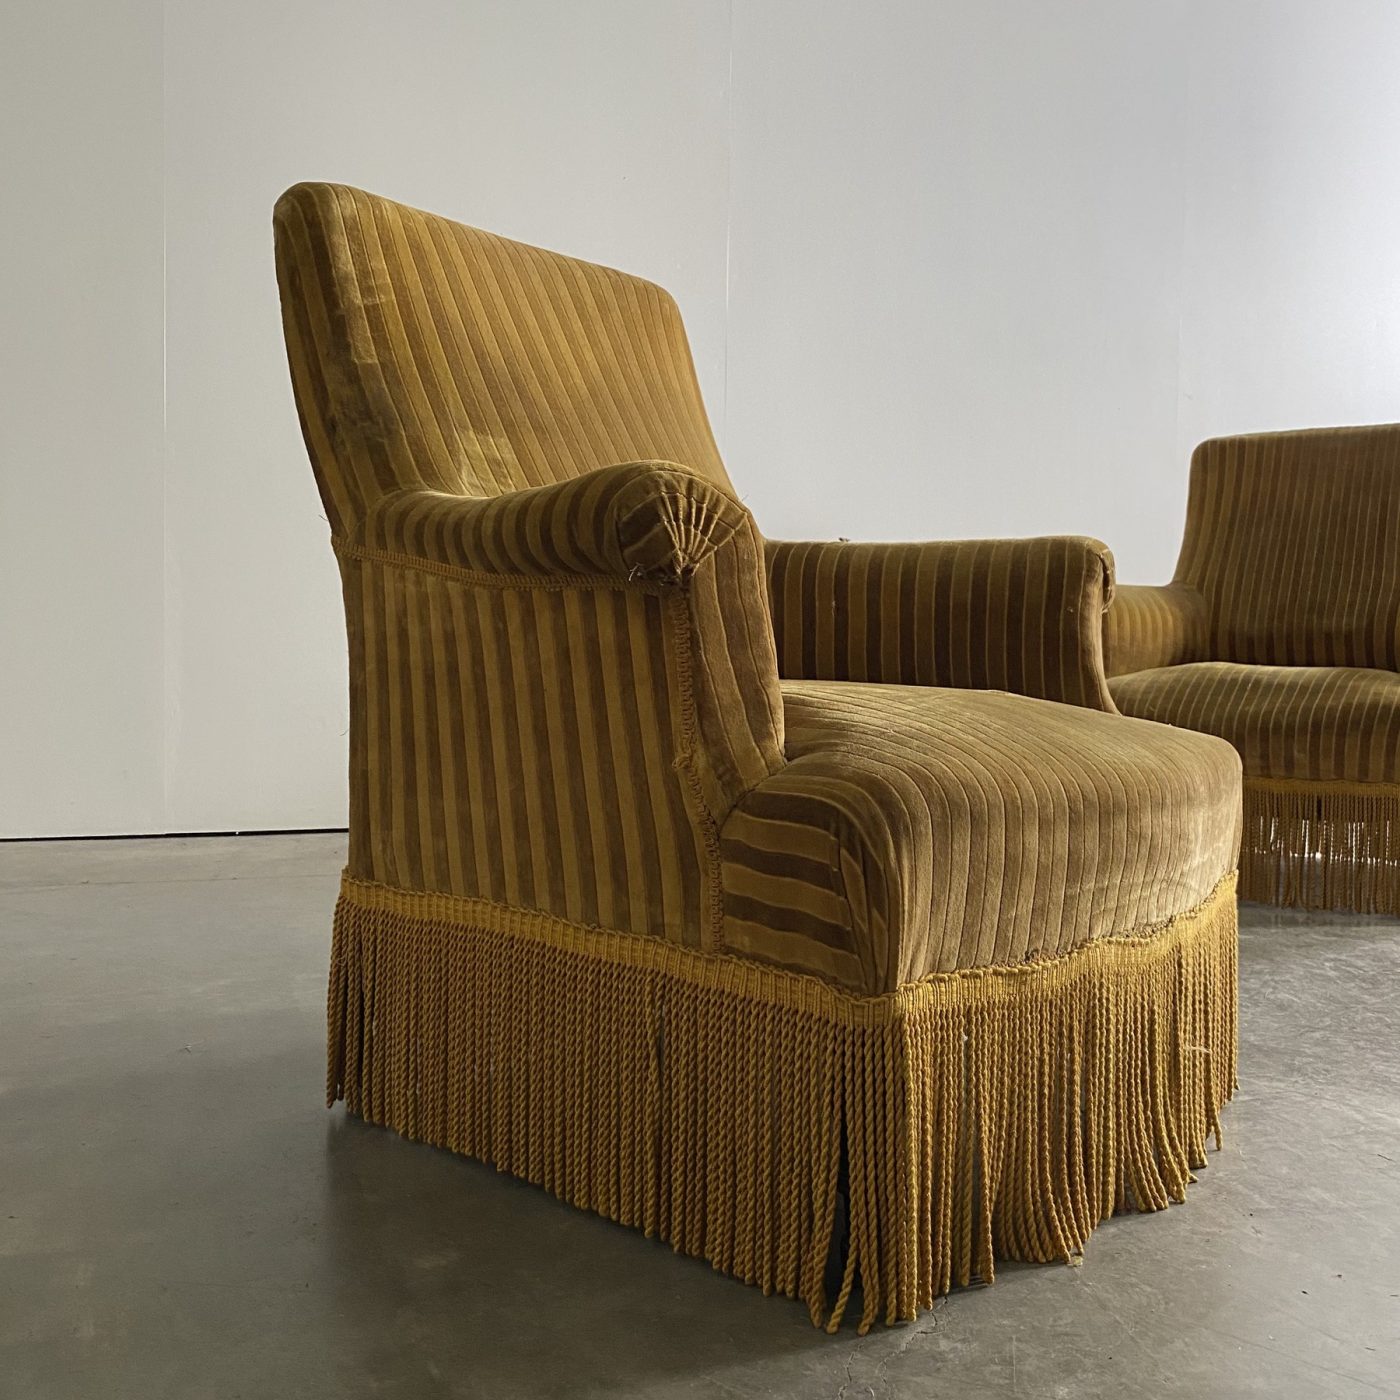 objet-vagabond-napoleon-chairs0003